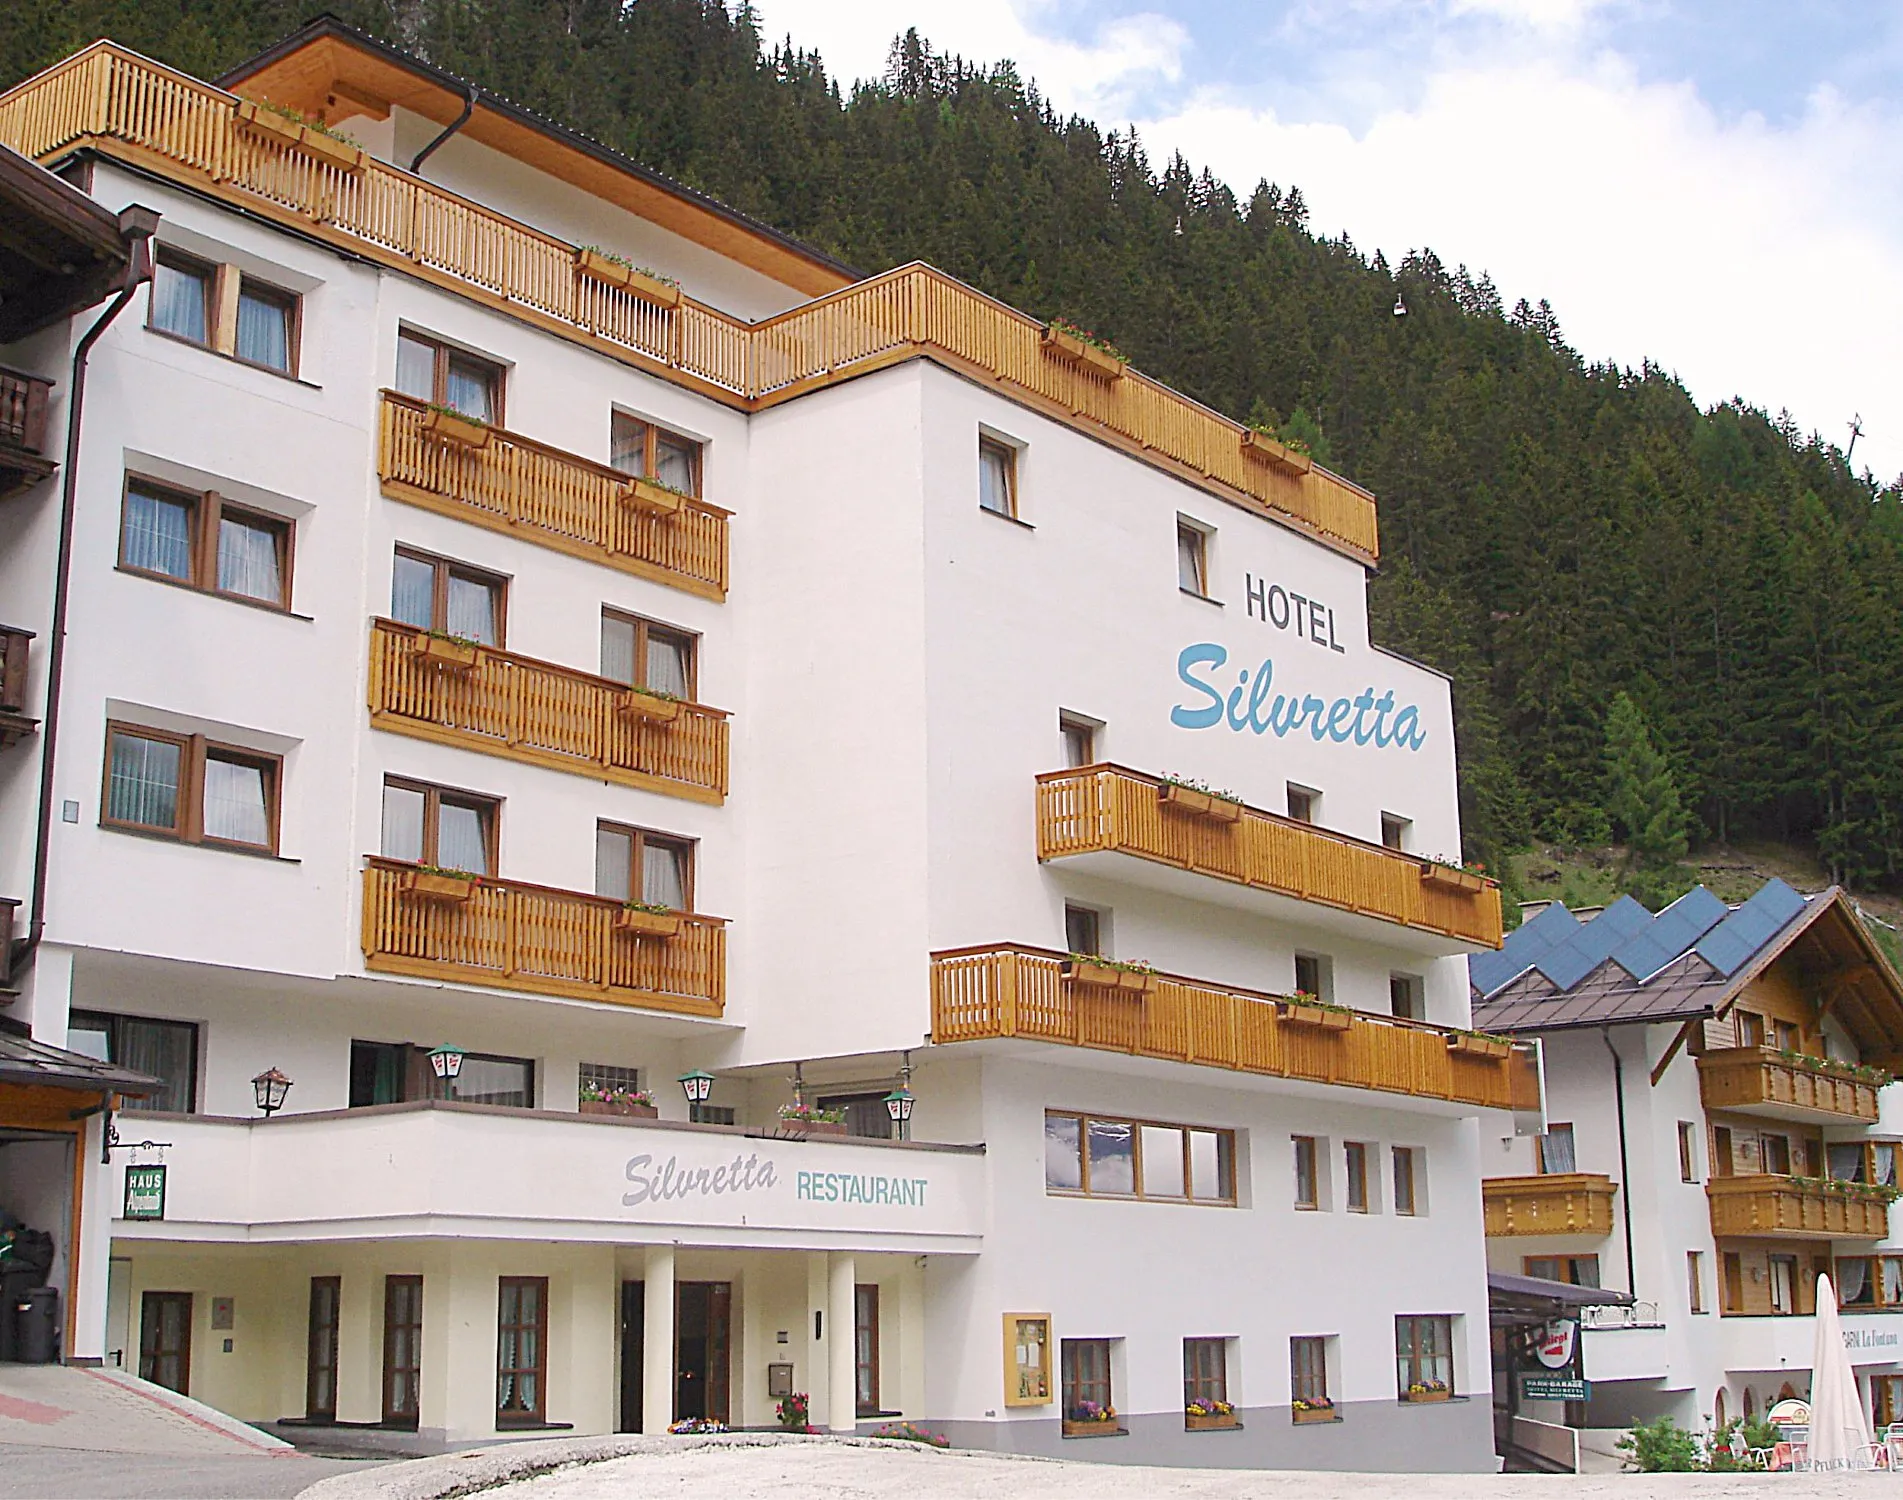 Building hotel Hotel Silvretta